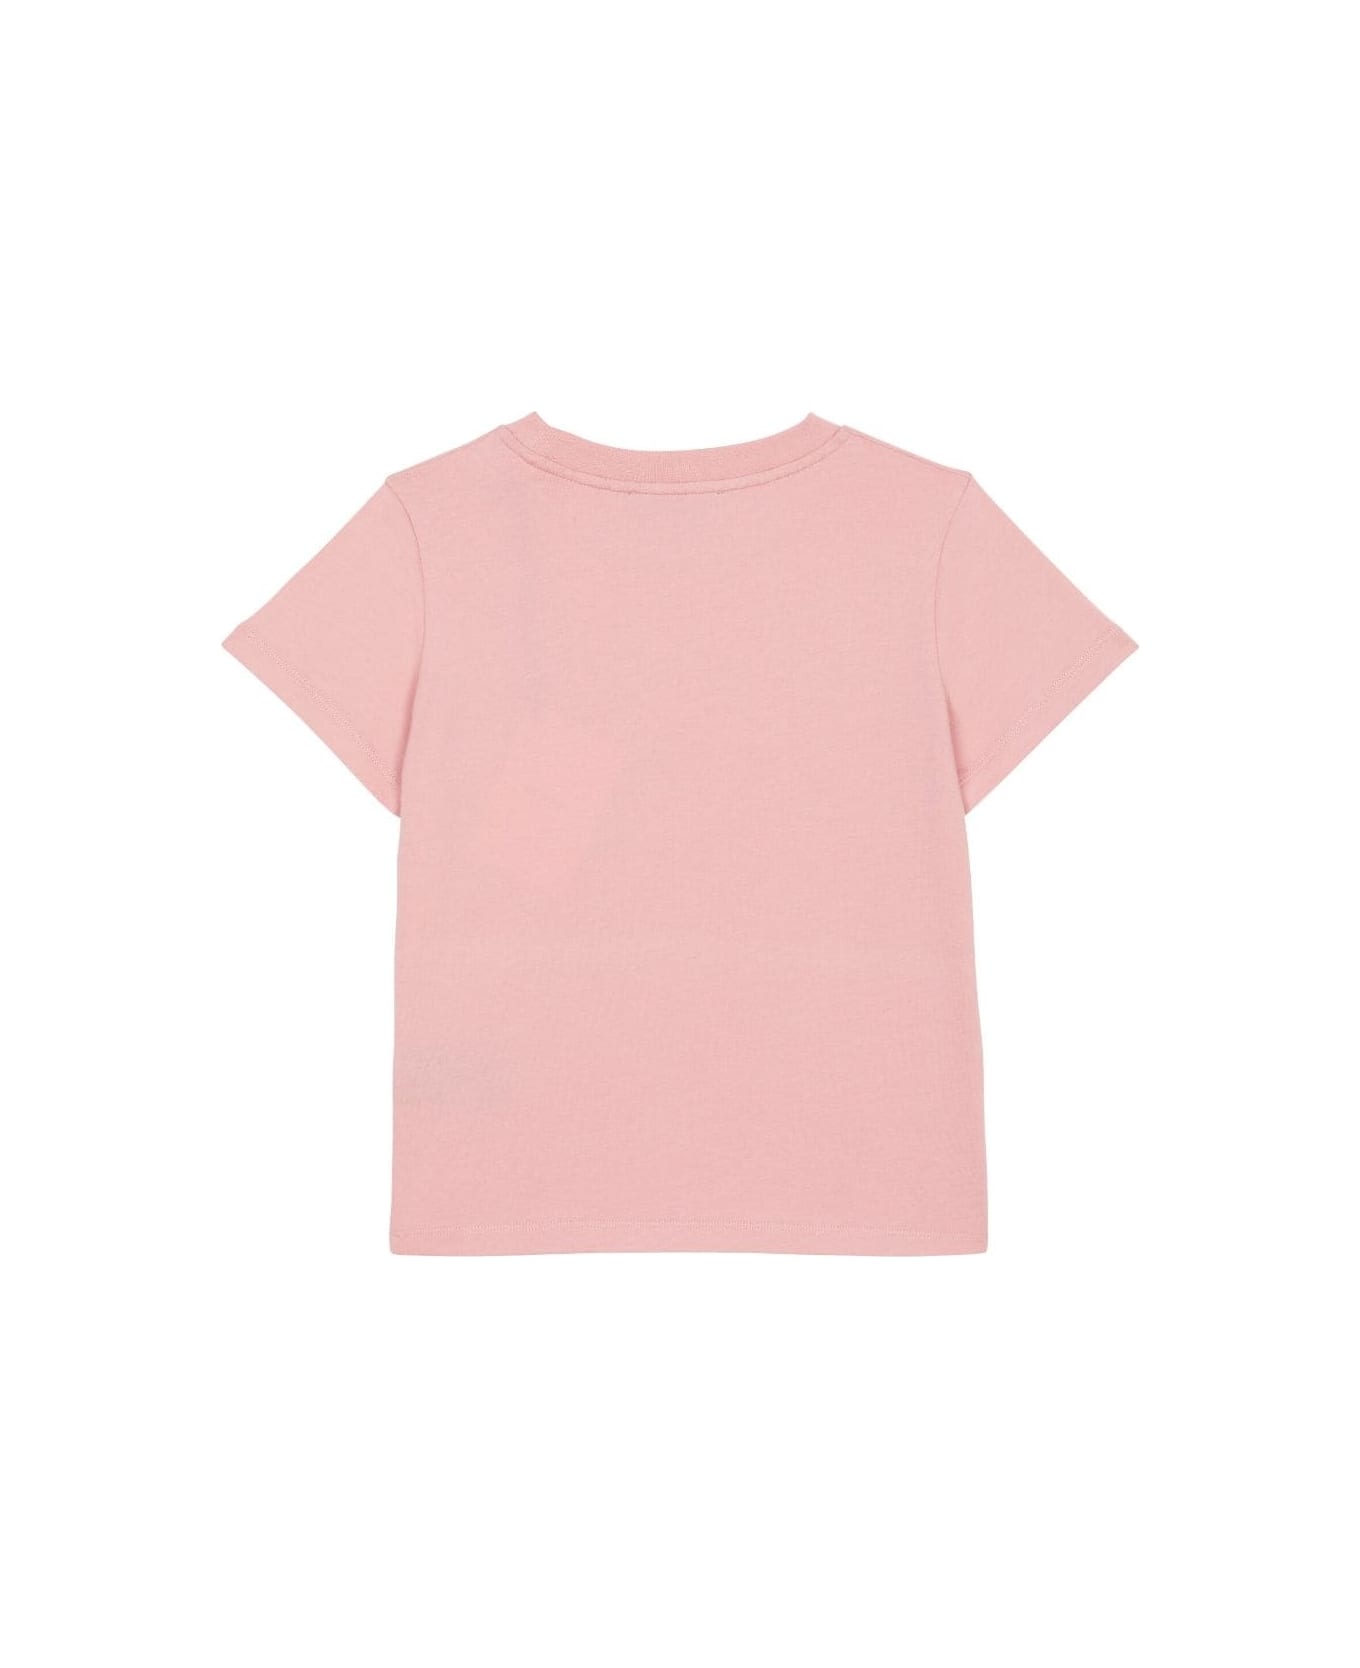 Balmain Logo T-shirt - Pink Tシャツ＆ポロシャツ